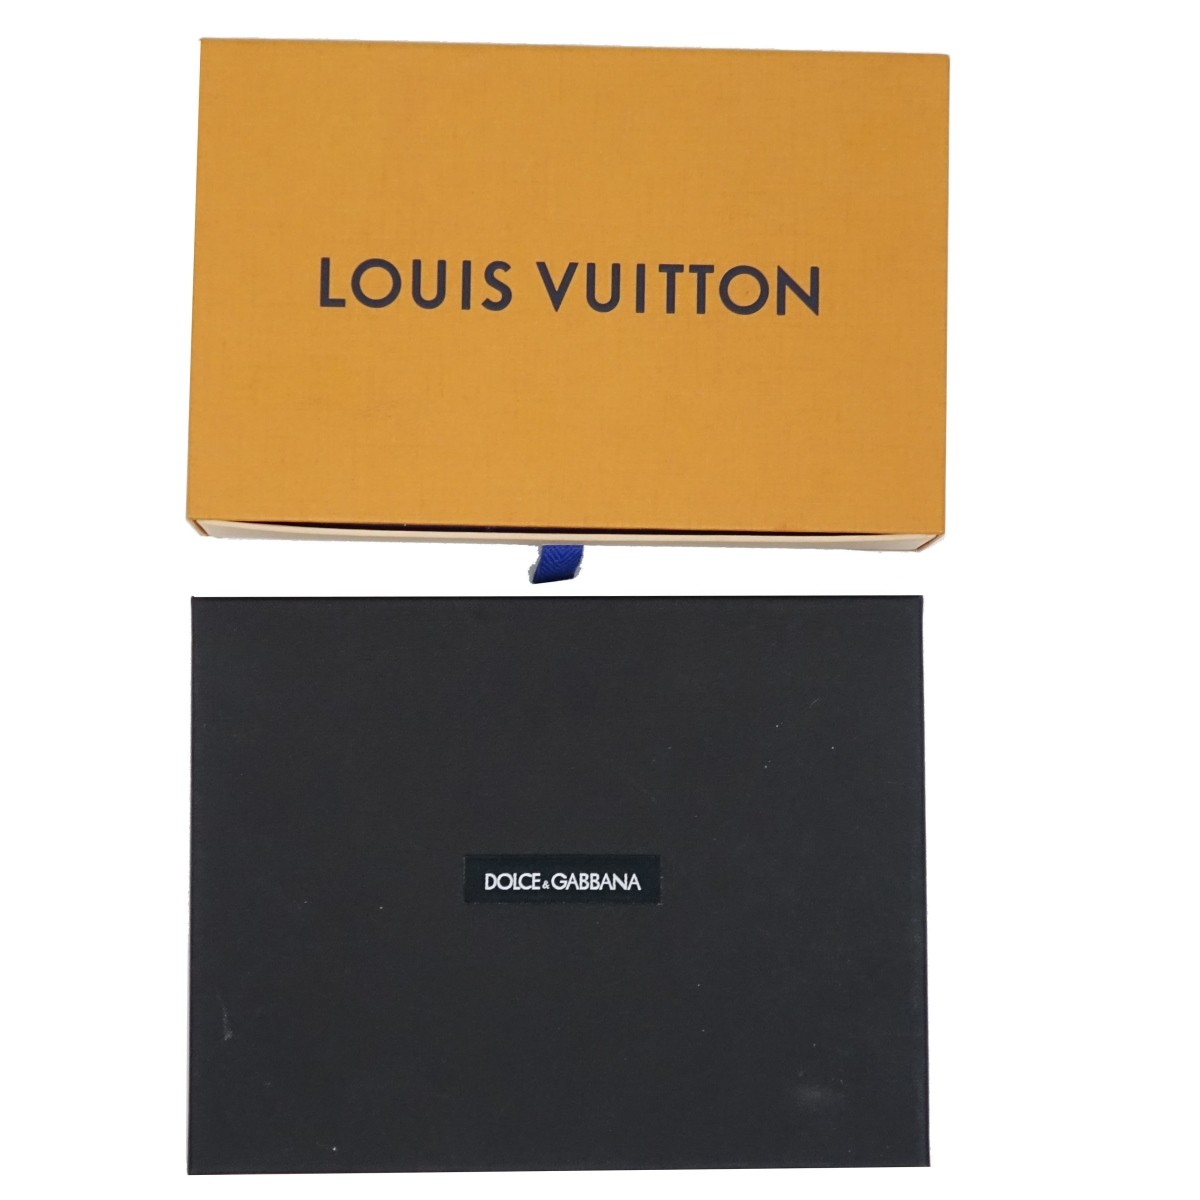 Louis Vuitton / Dolce & Gabbana Items